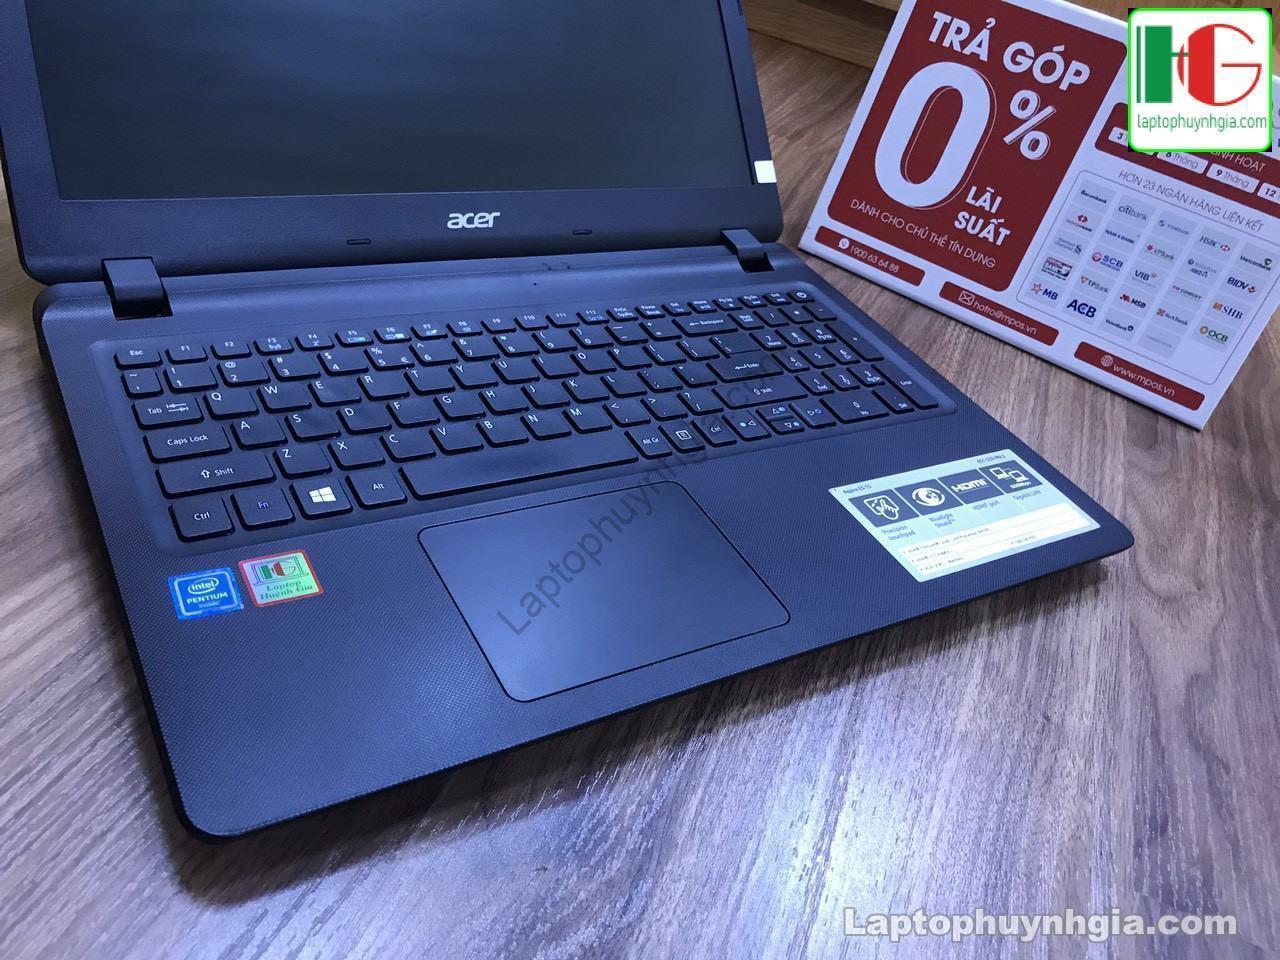 Laptop Acer 533 N4200u 4g 500g Lcd 15 Laptopcubinhduong.vn 5